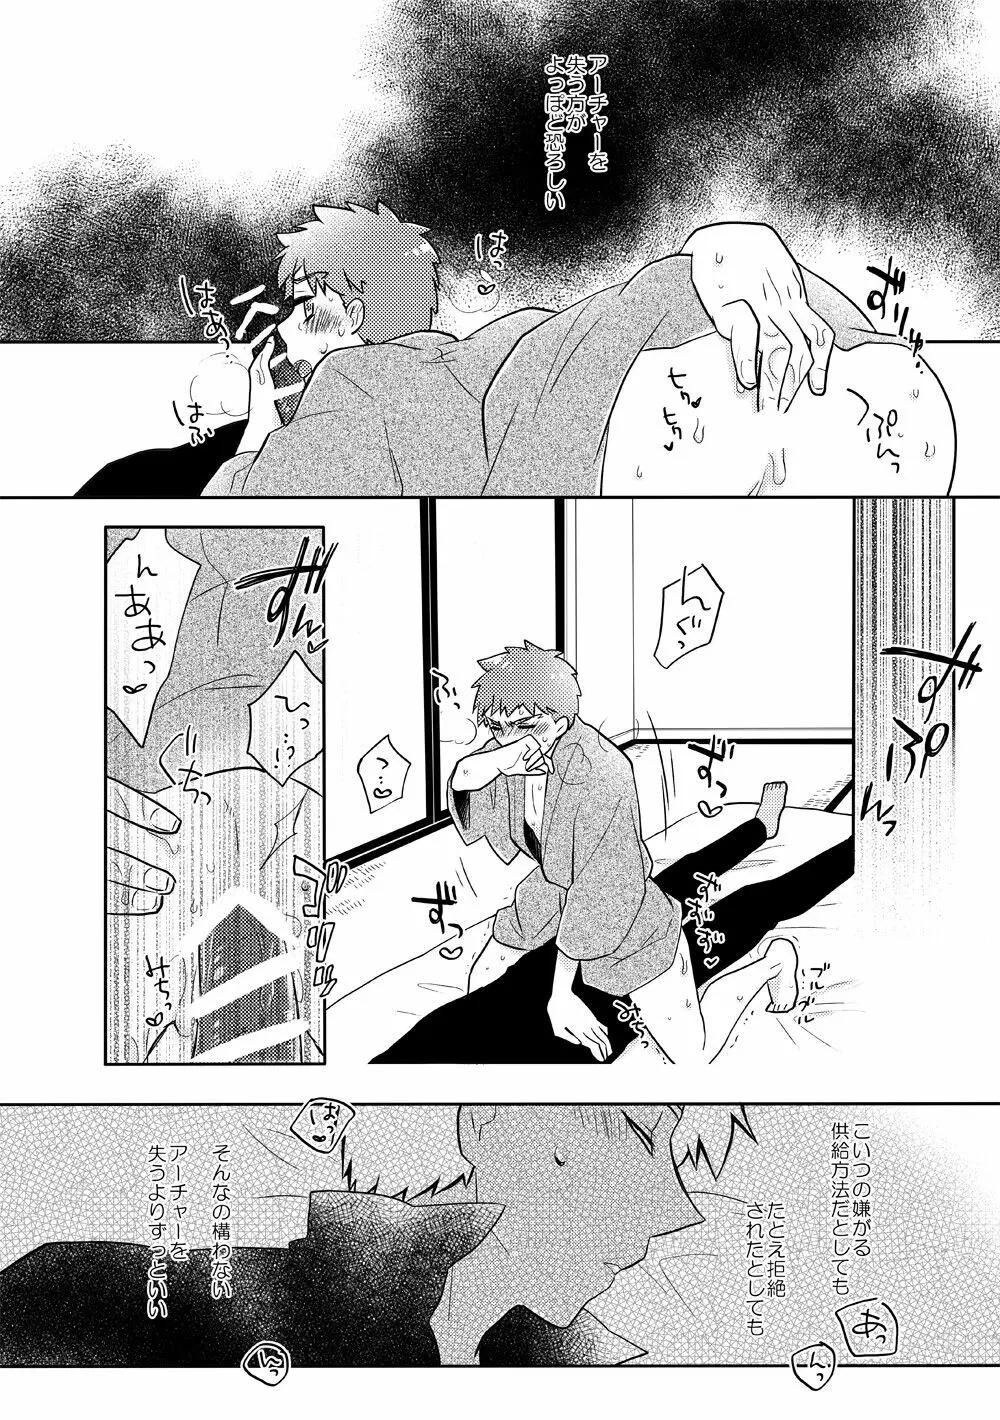 弓士本 - page48